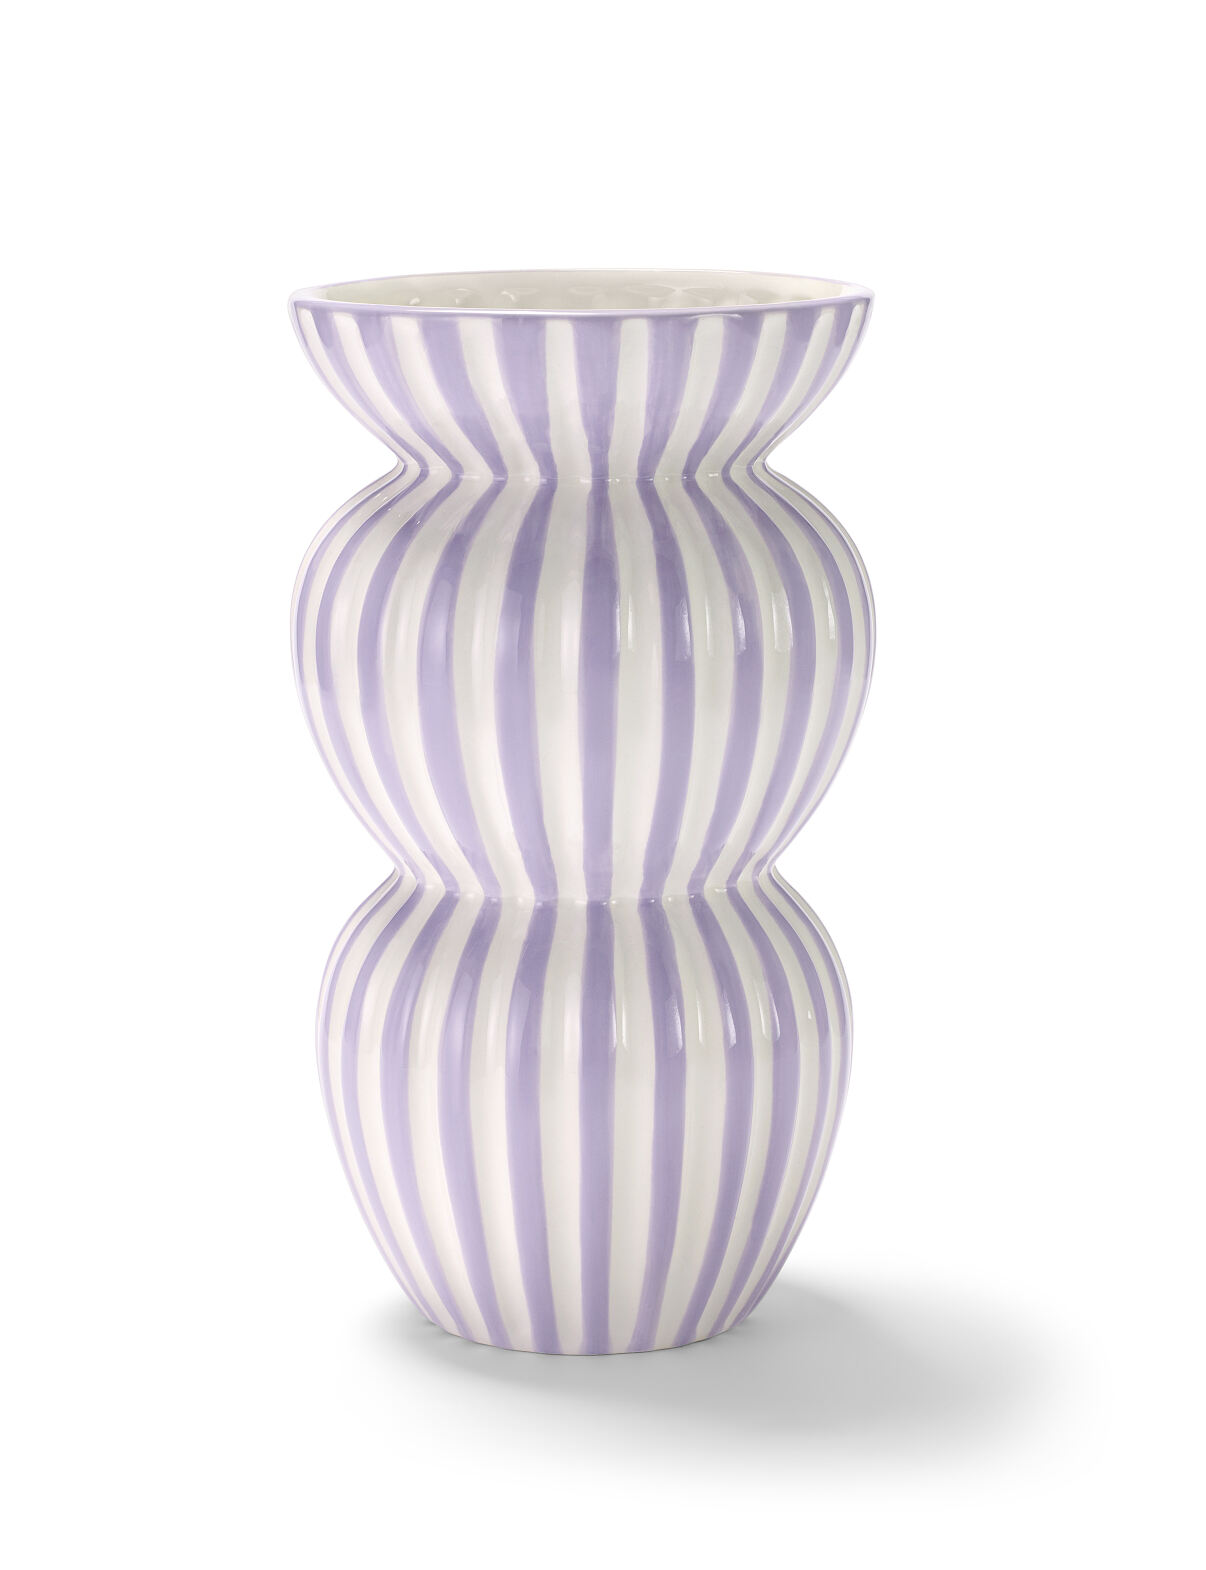 136145 Vase Keramik Groß FS 1 10.24